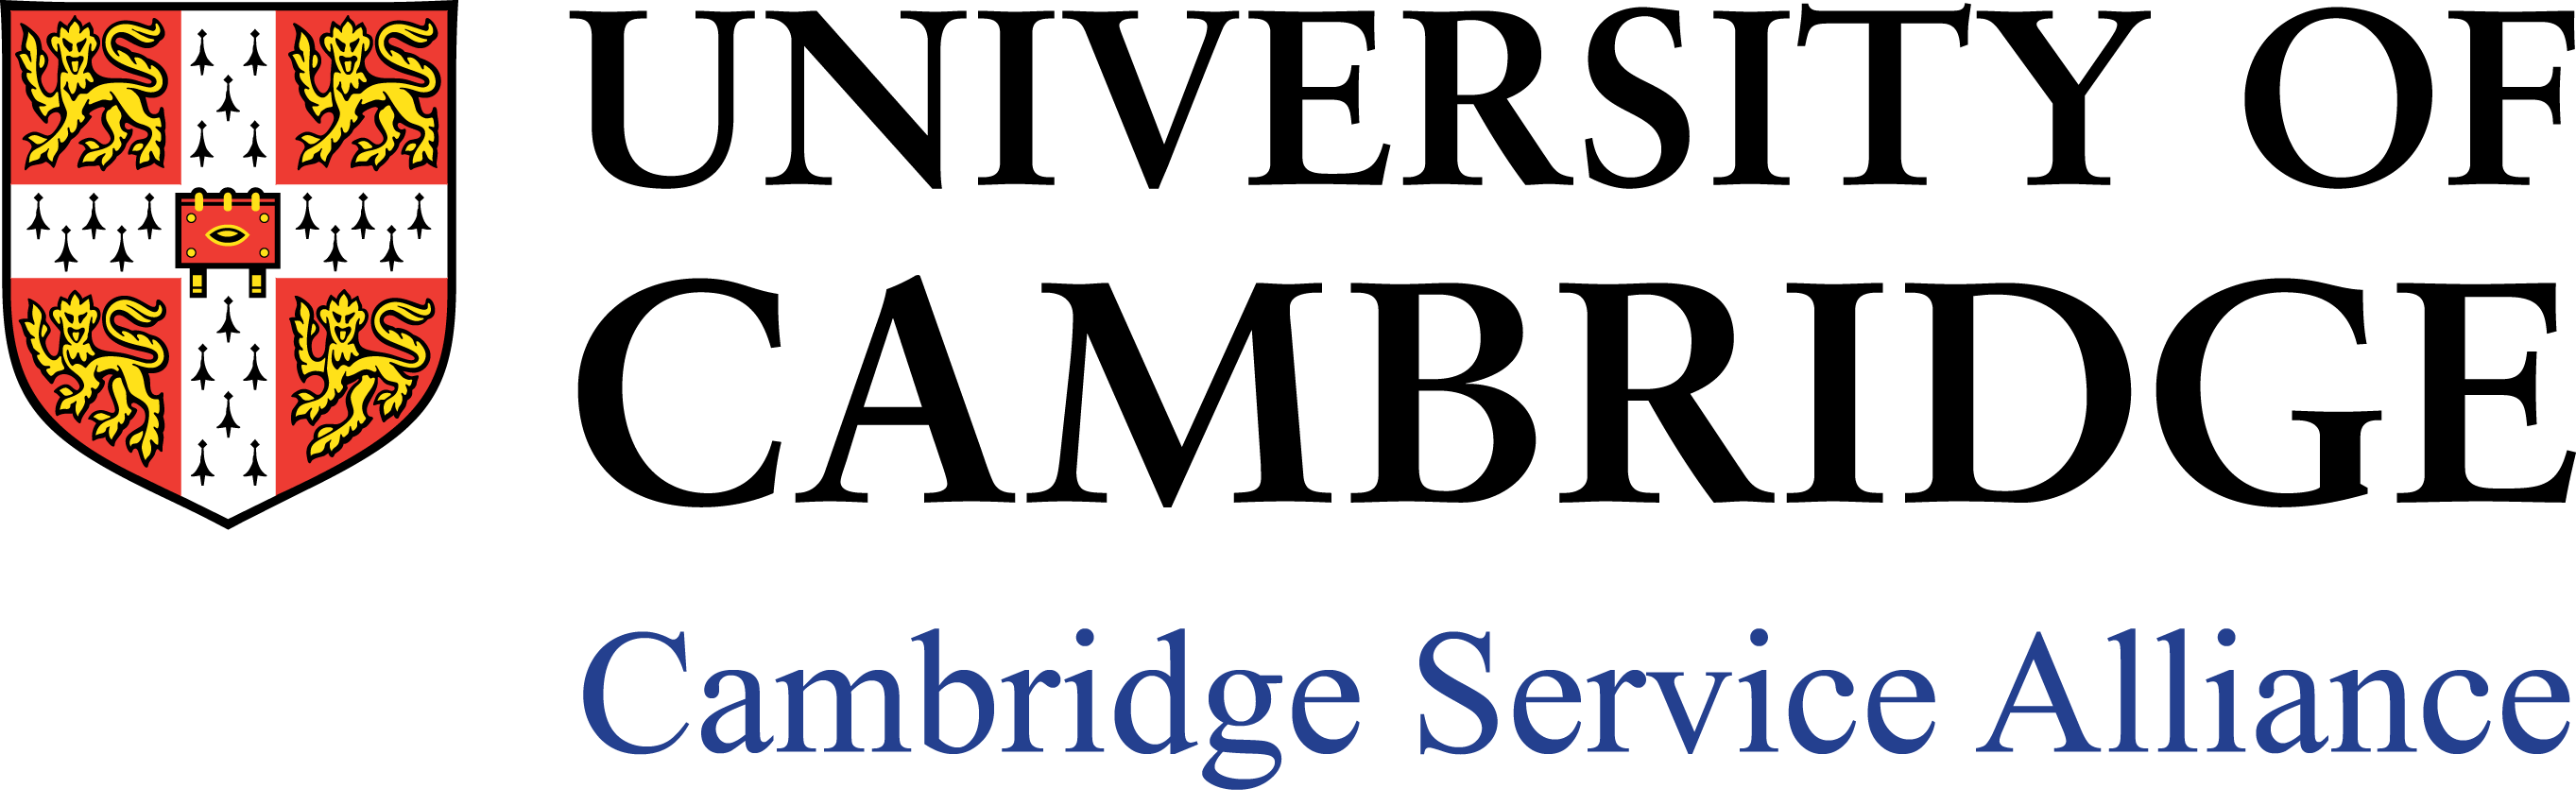 Cambridge Service Alliance Logo reversed